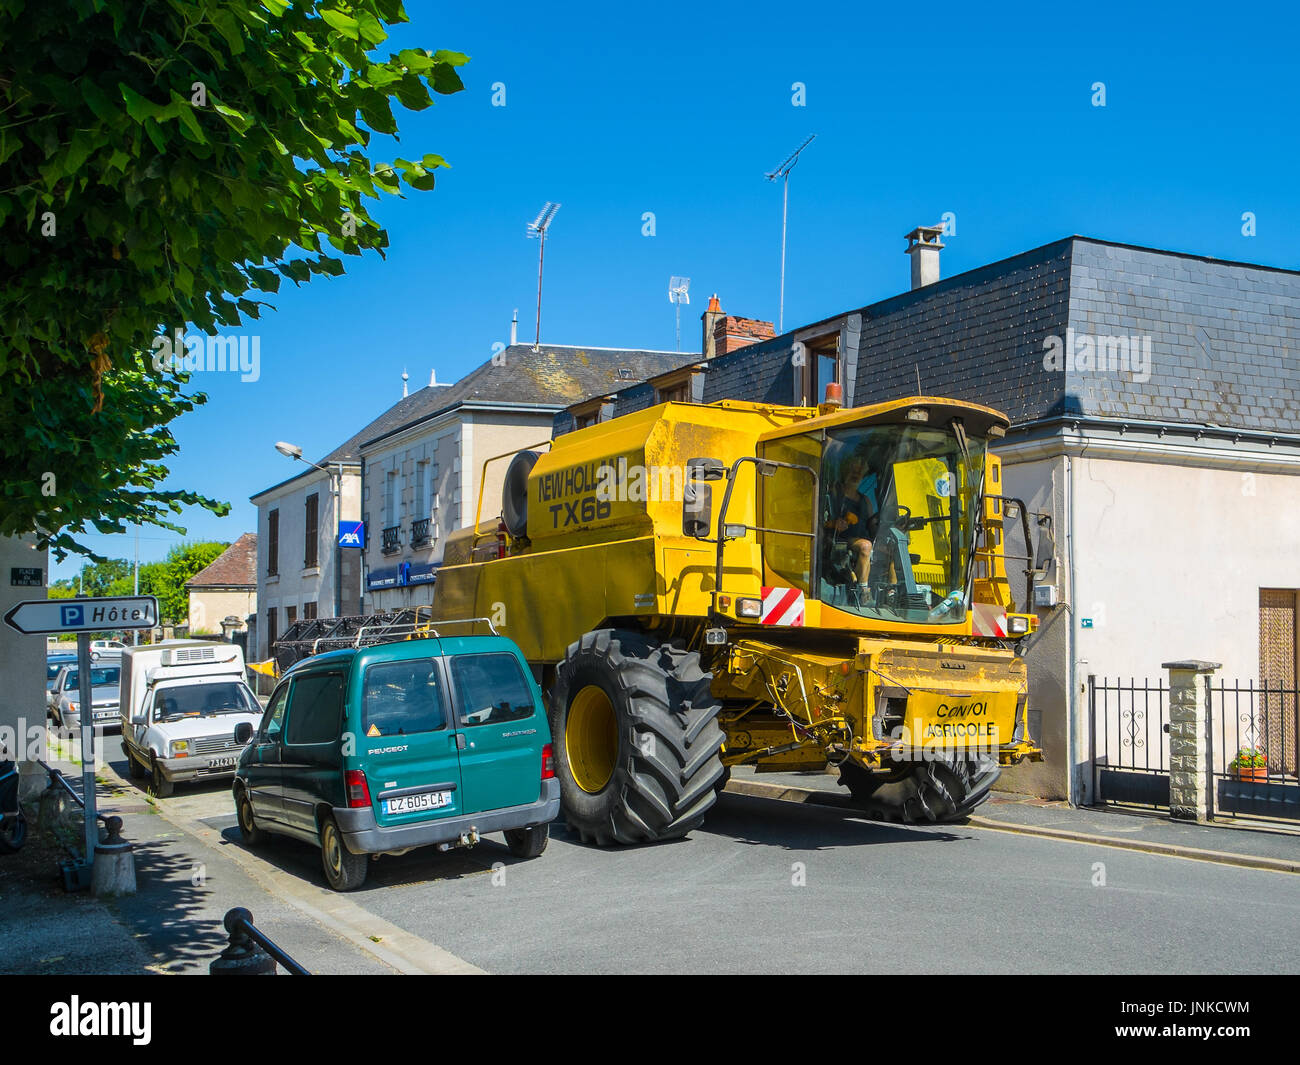 'New Holland TX66' combine harvester on narrow town street, Martizay, France. Stock Photo